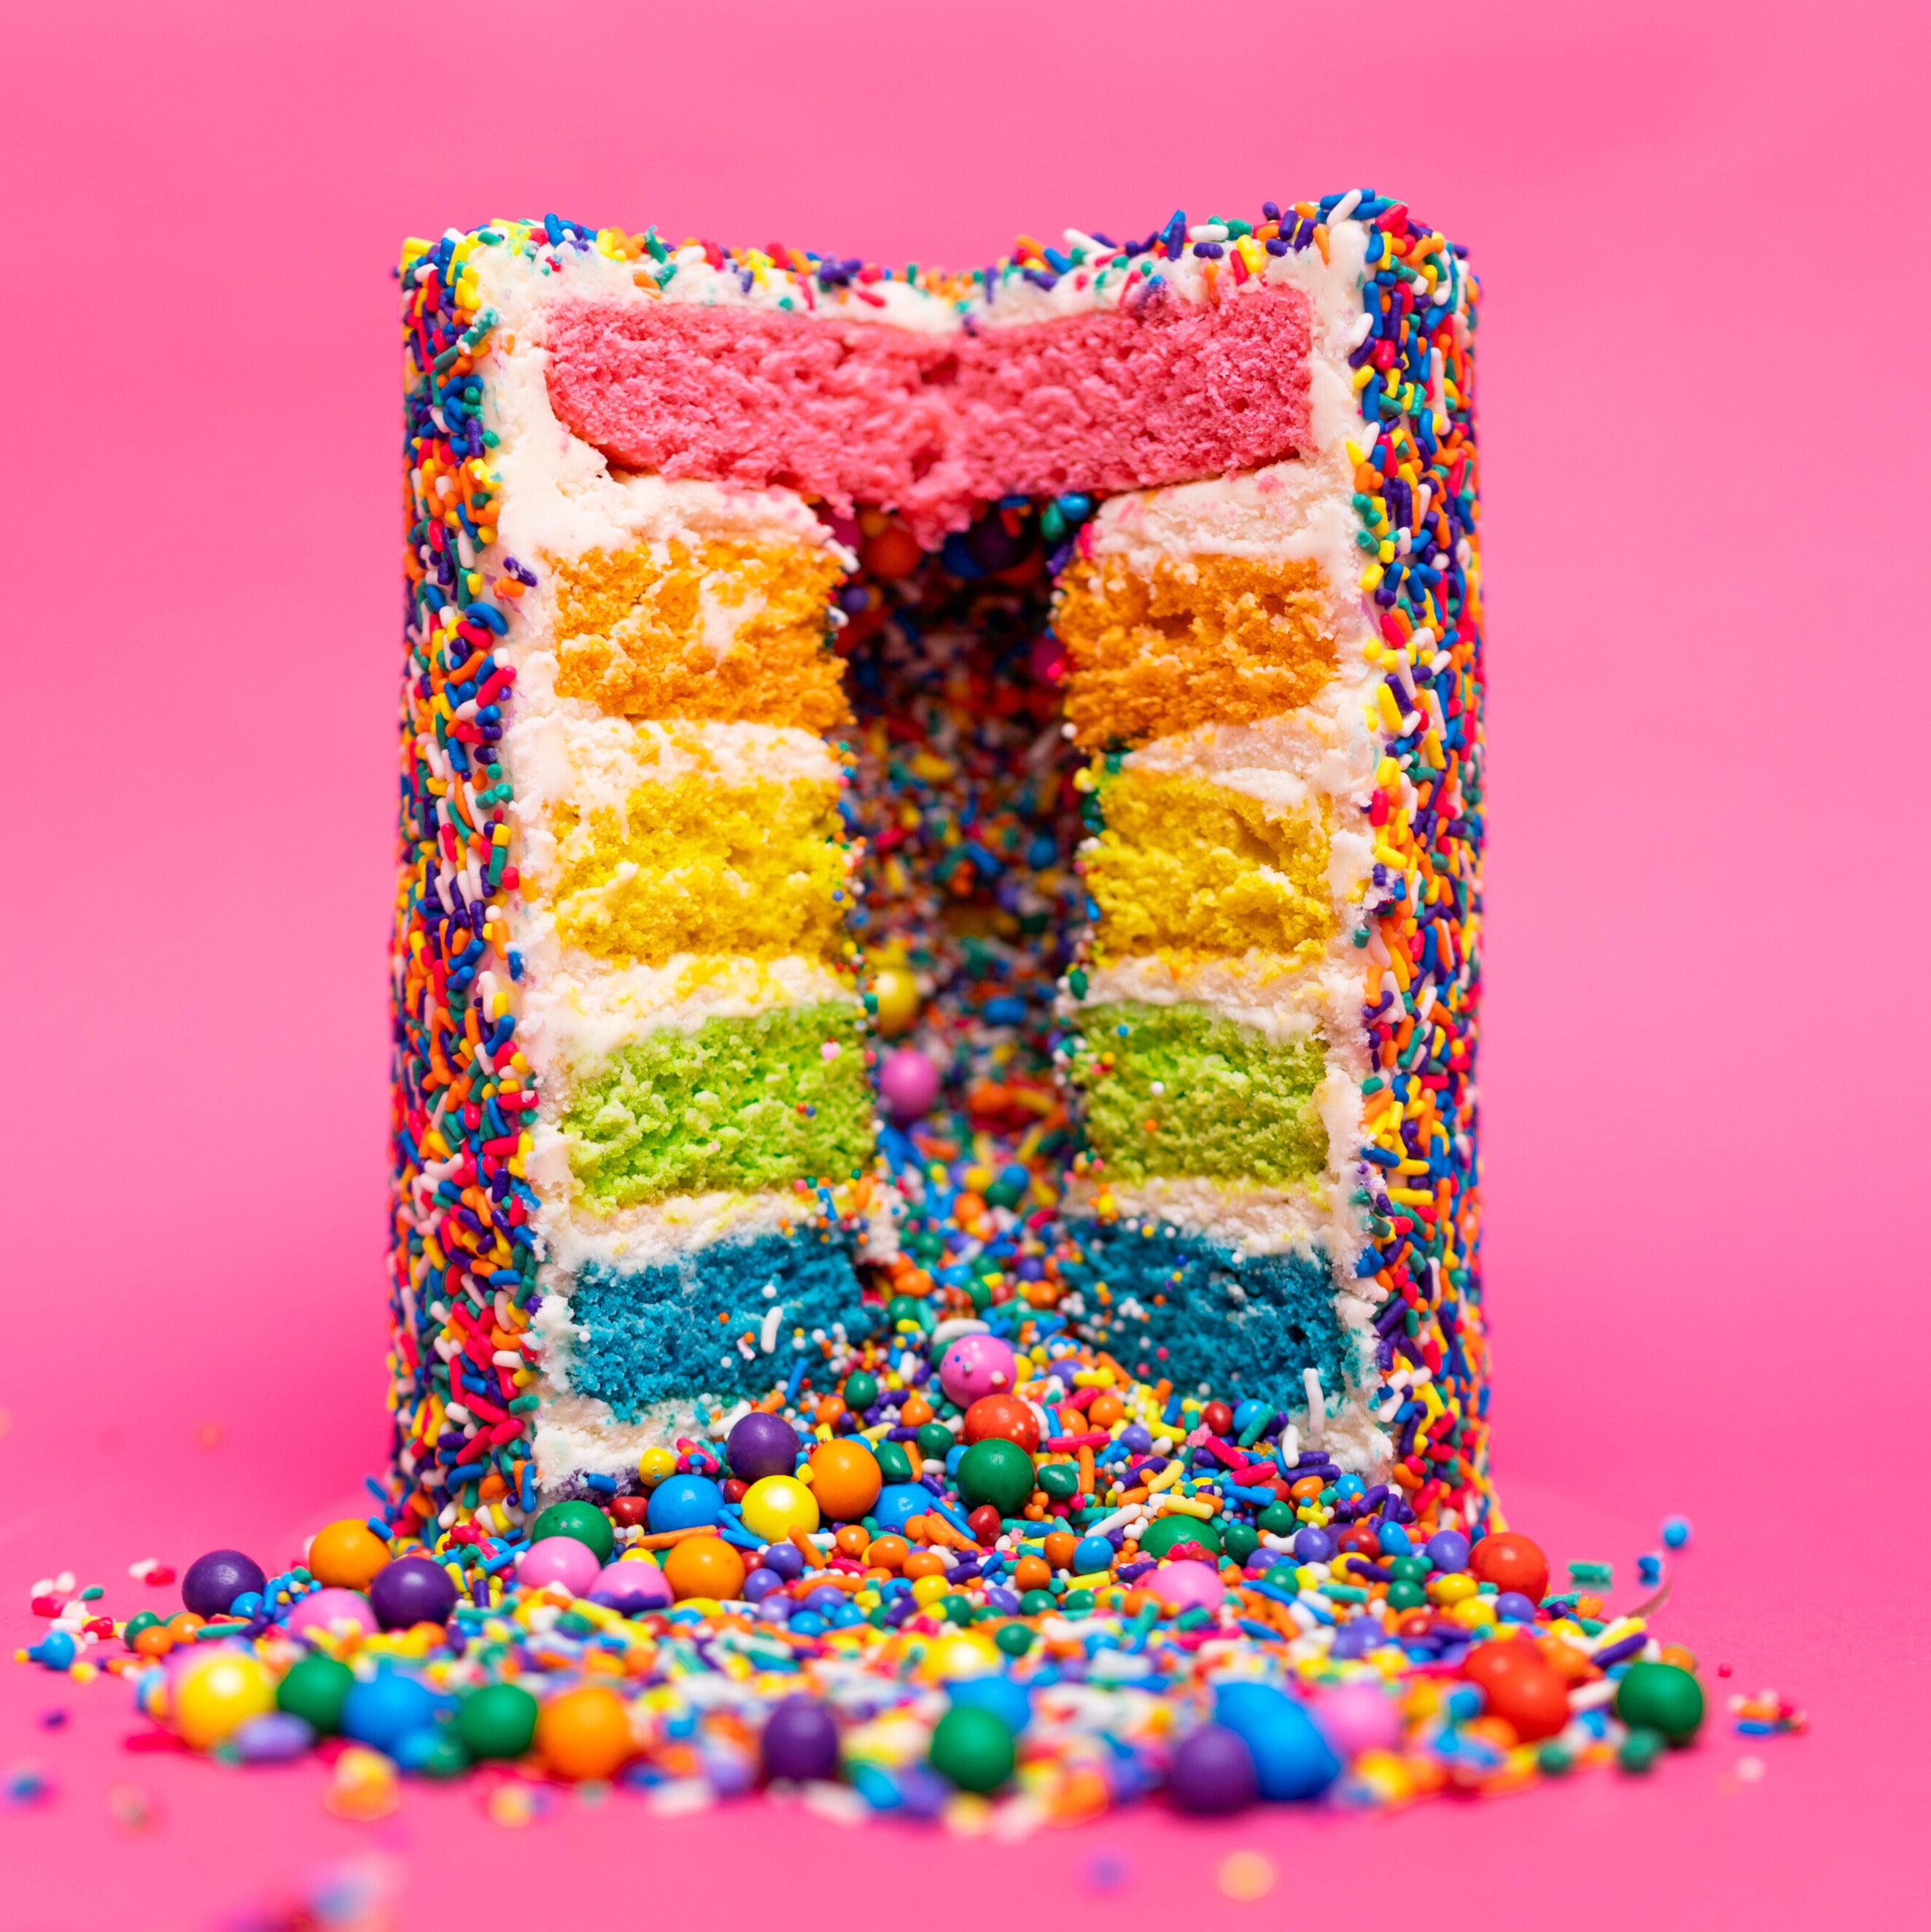 Rainbow Explosion® Cake - Nationwide Shipping